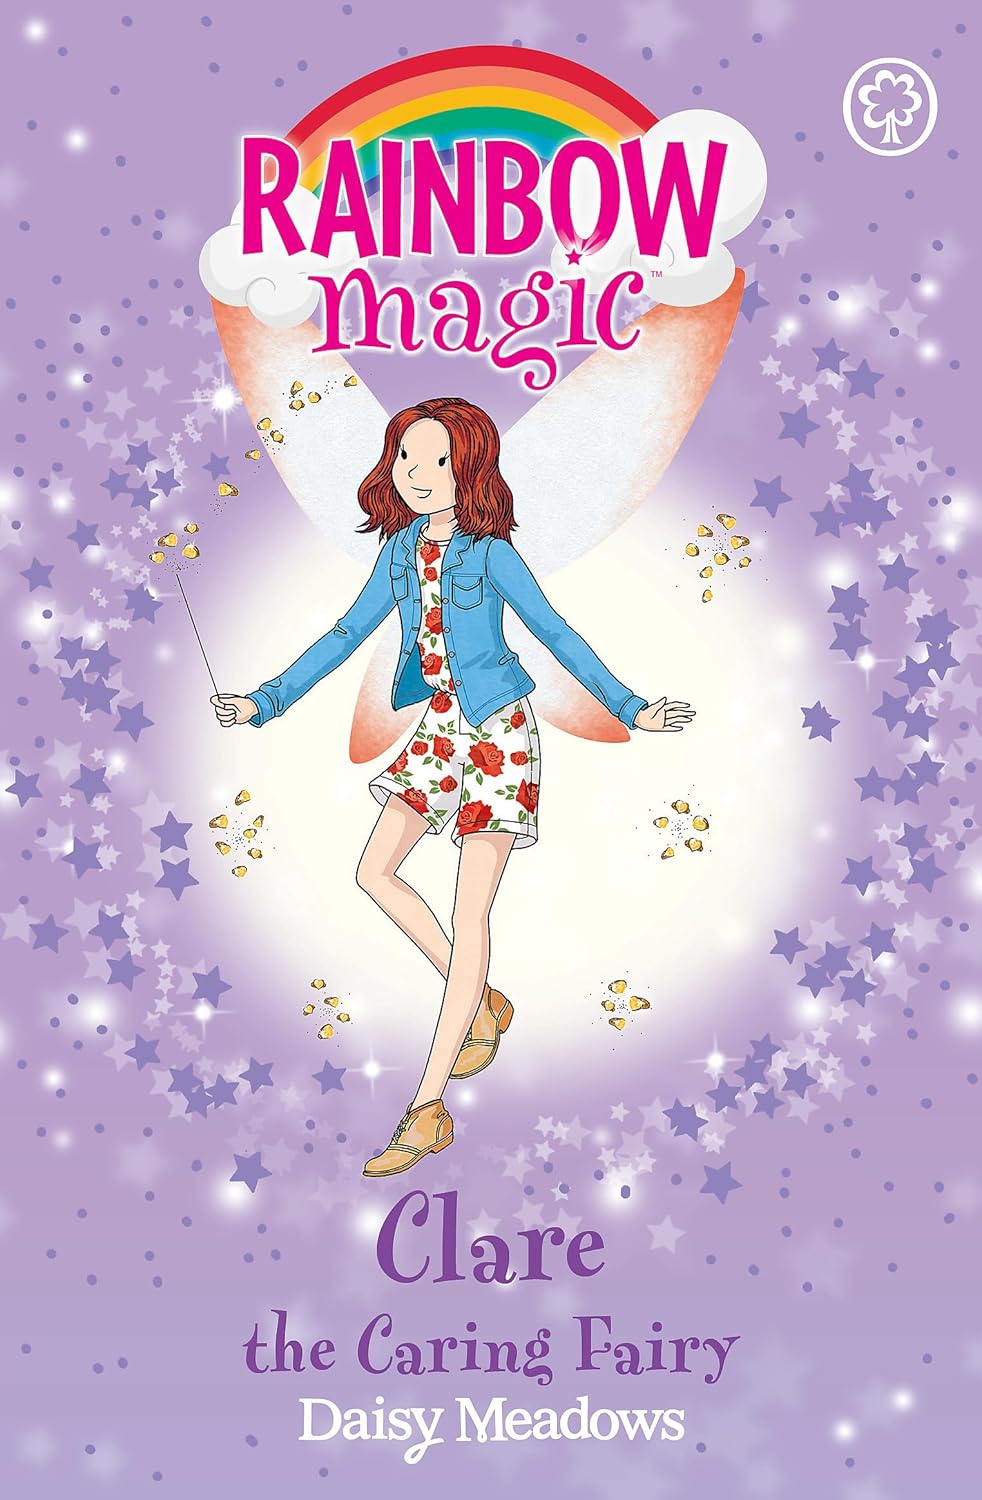 Clare the Caring Fairy: Rainbow Magic